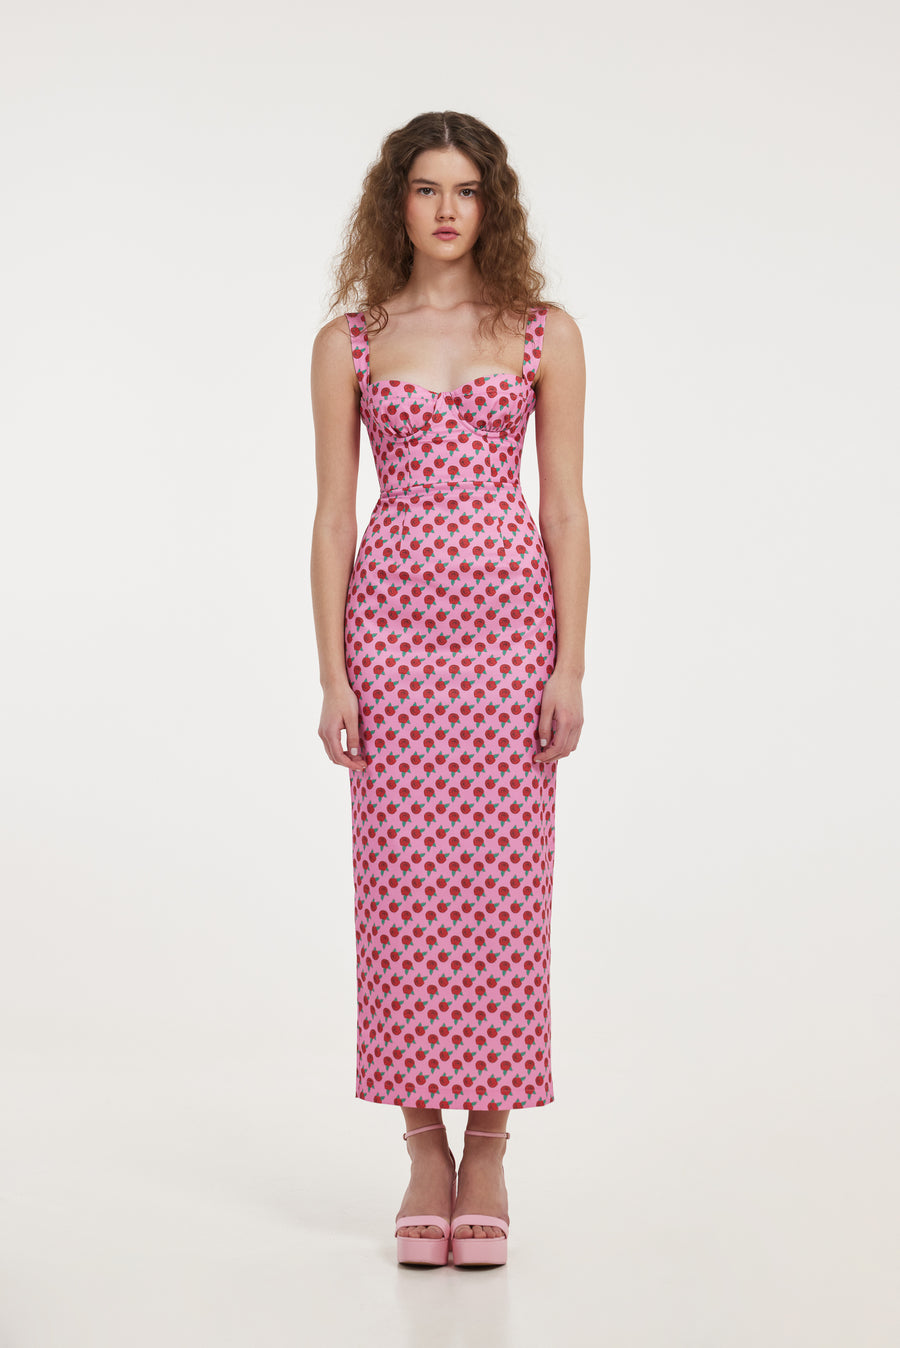 Merliah Dress (Pink)